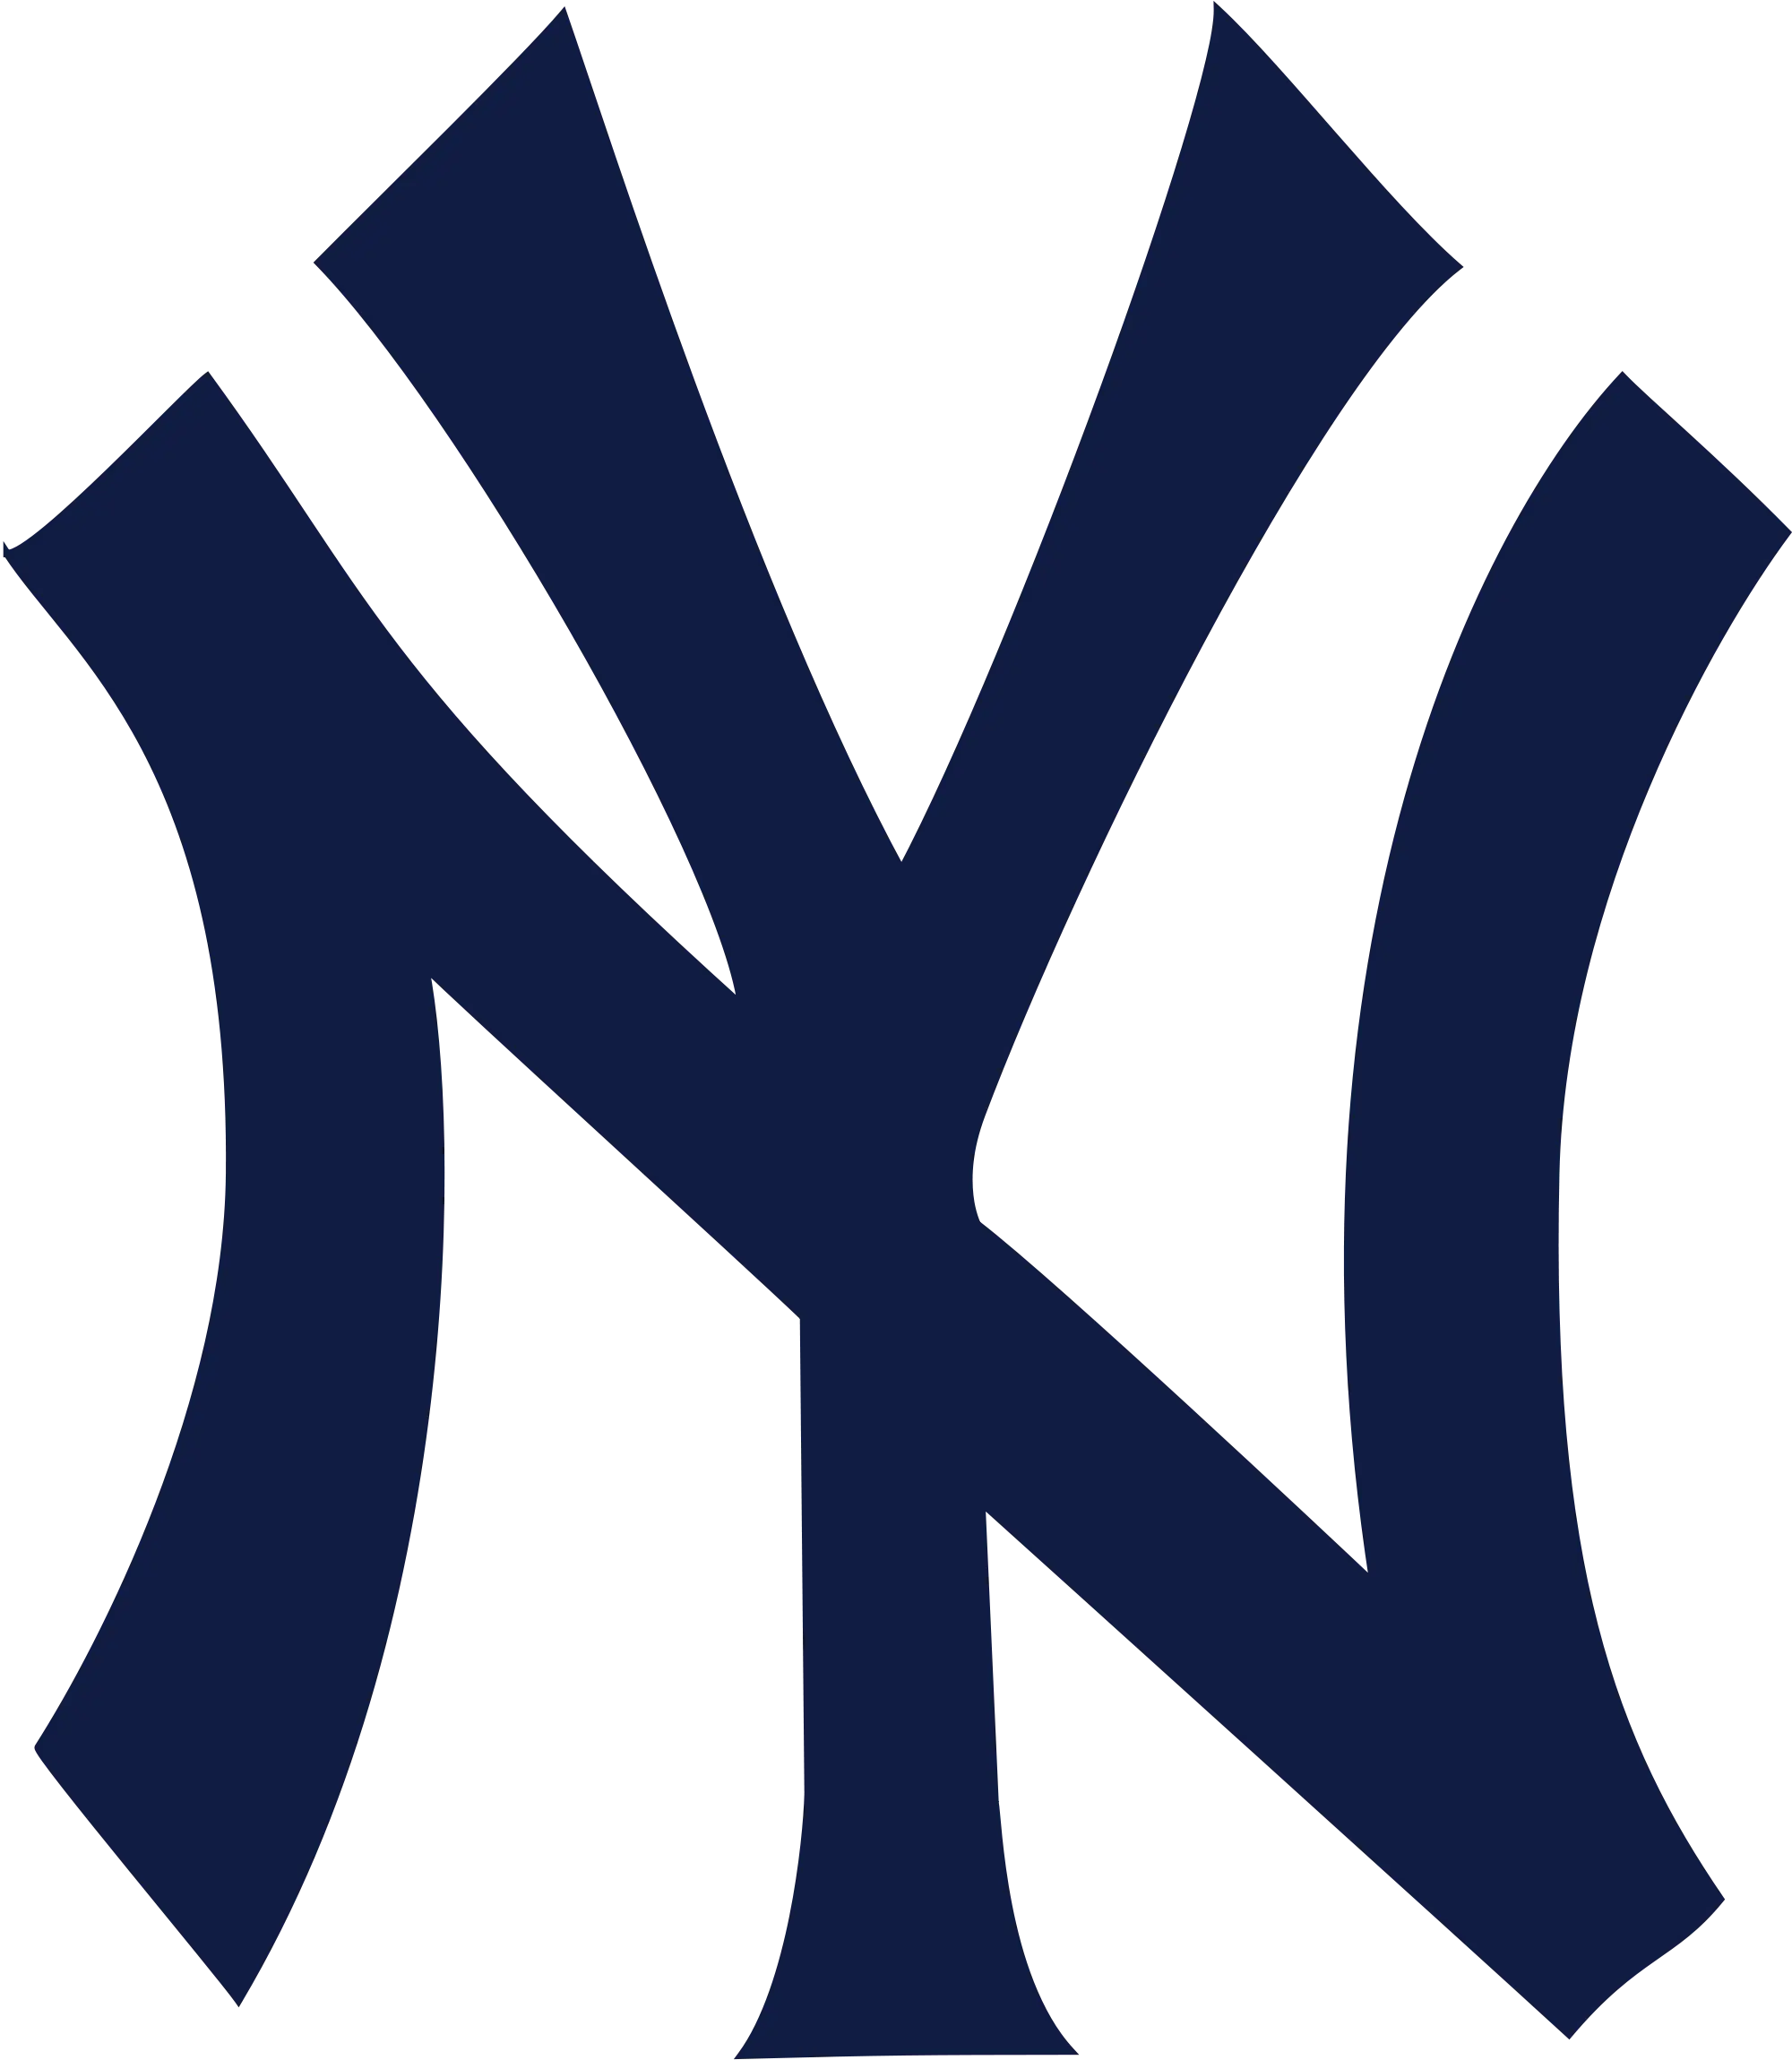 New York Yankees Evolution of the Jersey Fridge Magnets Uniform History.  NEW.